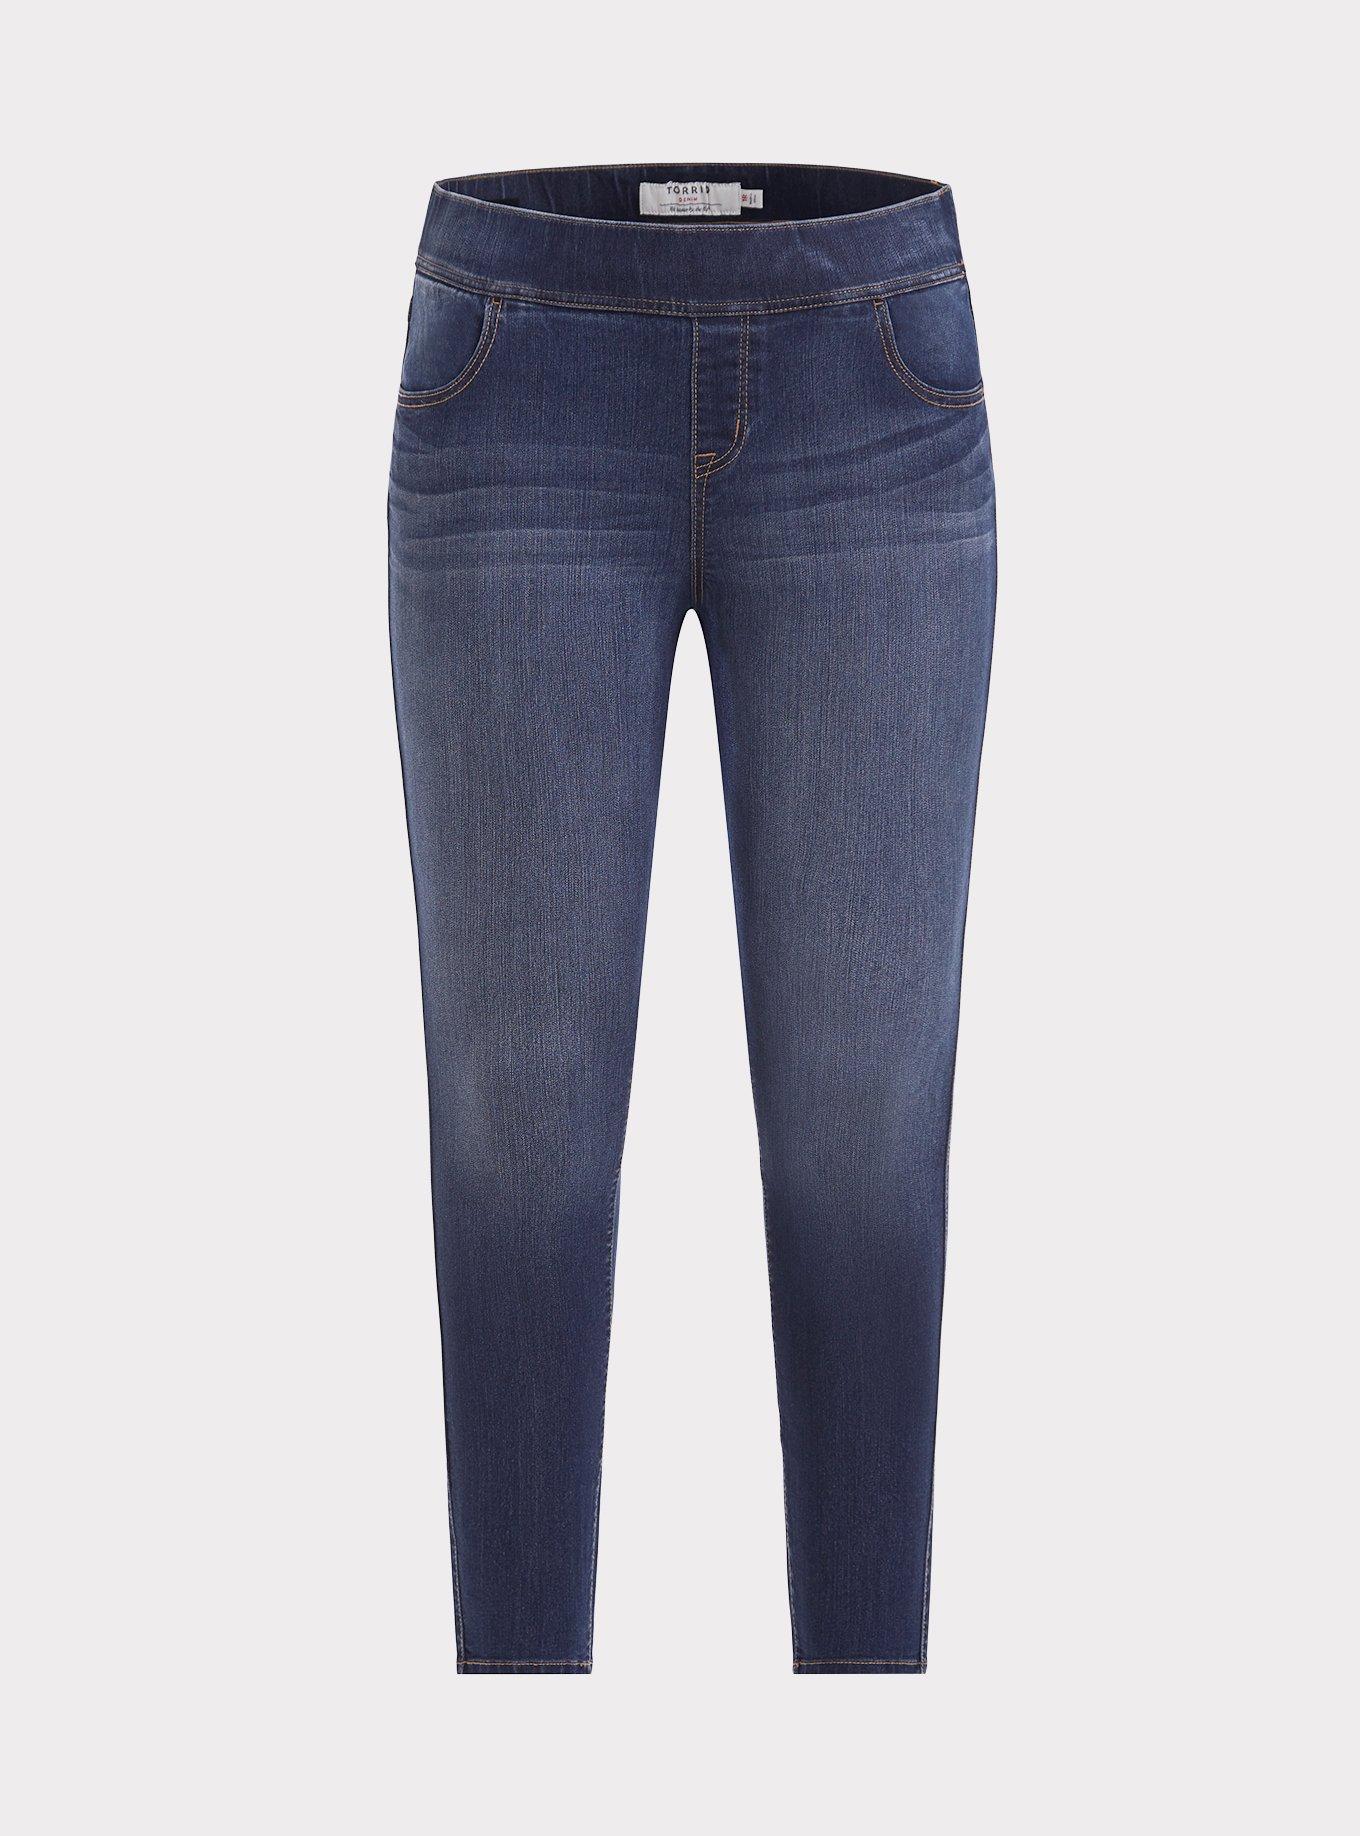 Wonderly Womens Jeans Size 18W Blue Denim Medium Wash Mid Rise